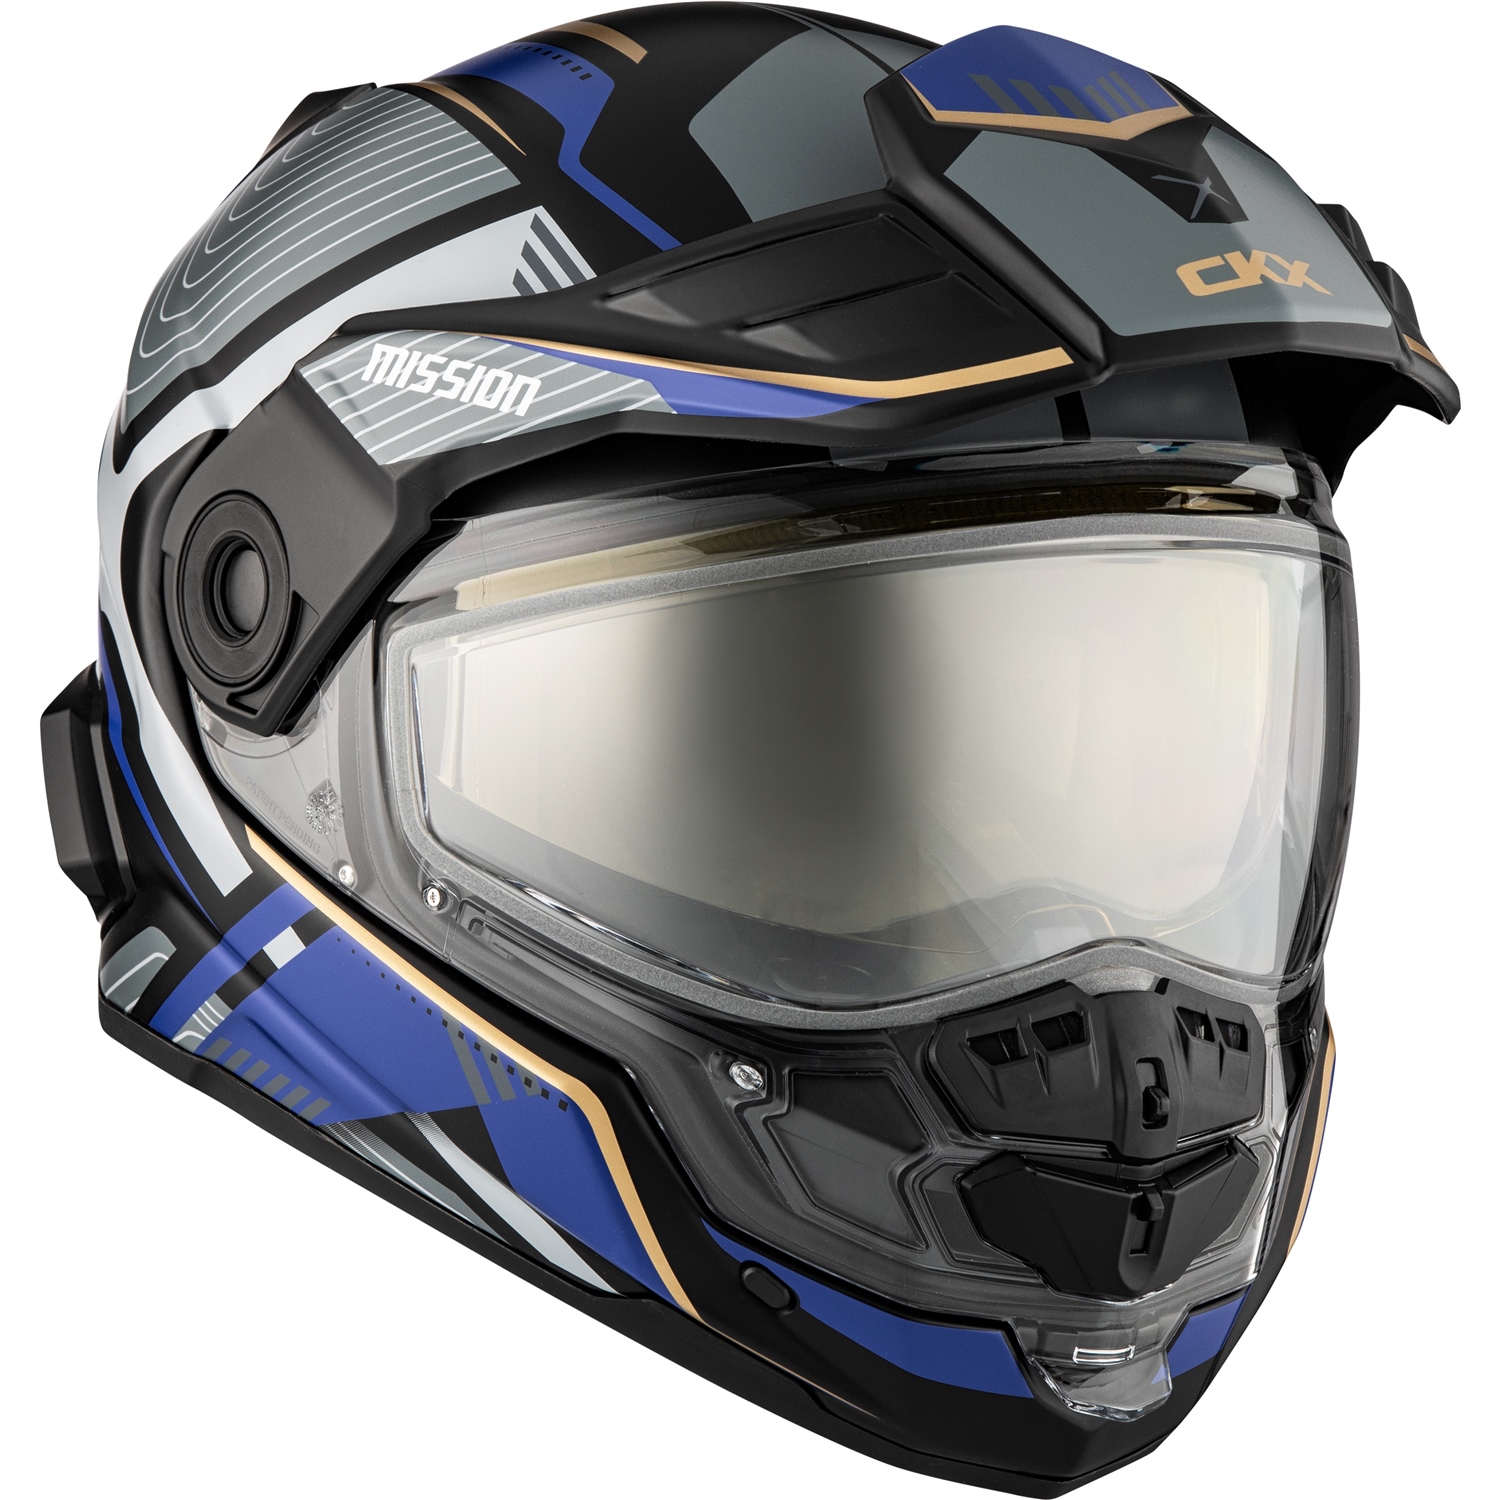 CKX Mission Full Face Helmet | CKXGear USA